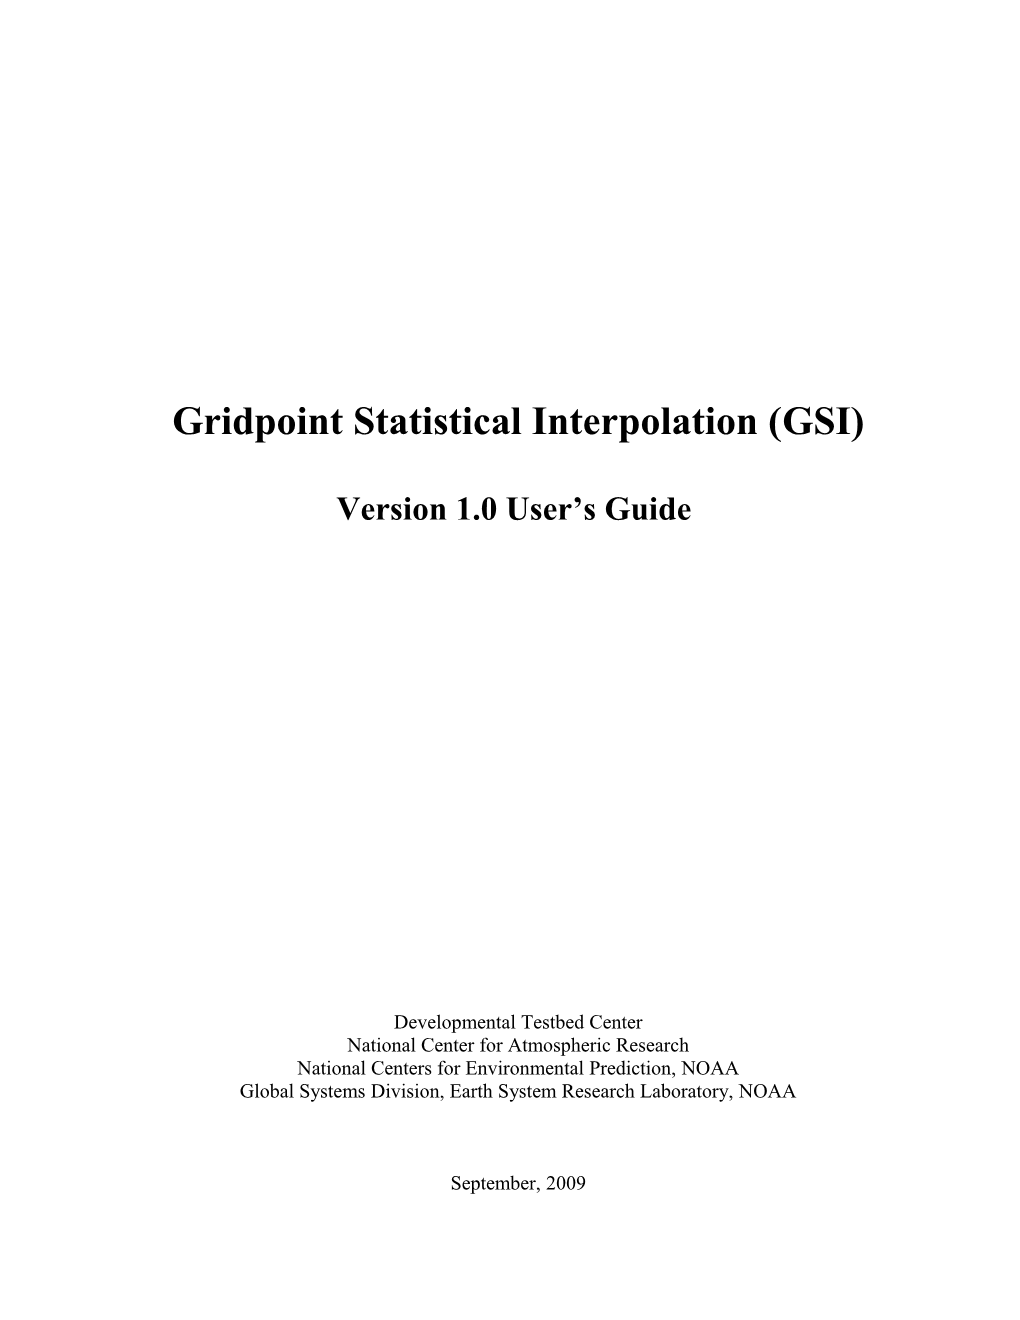 User S Guide for GSI